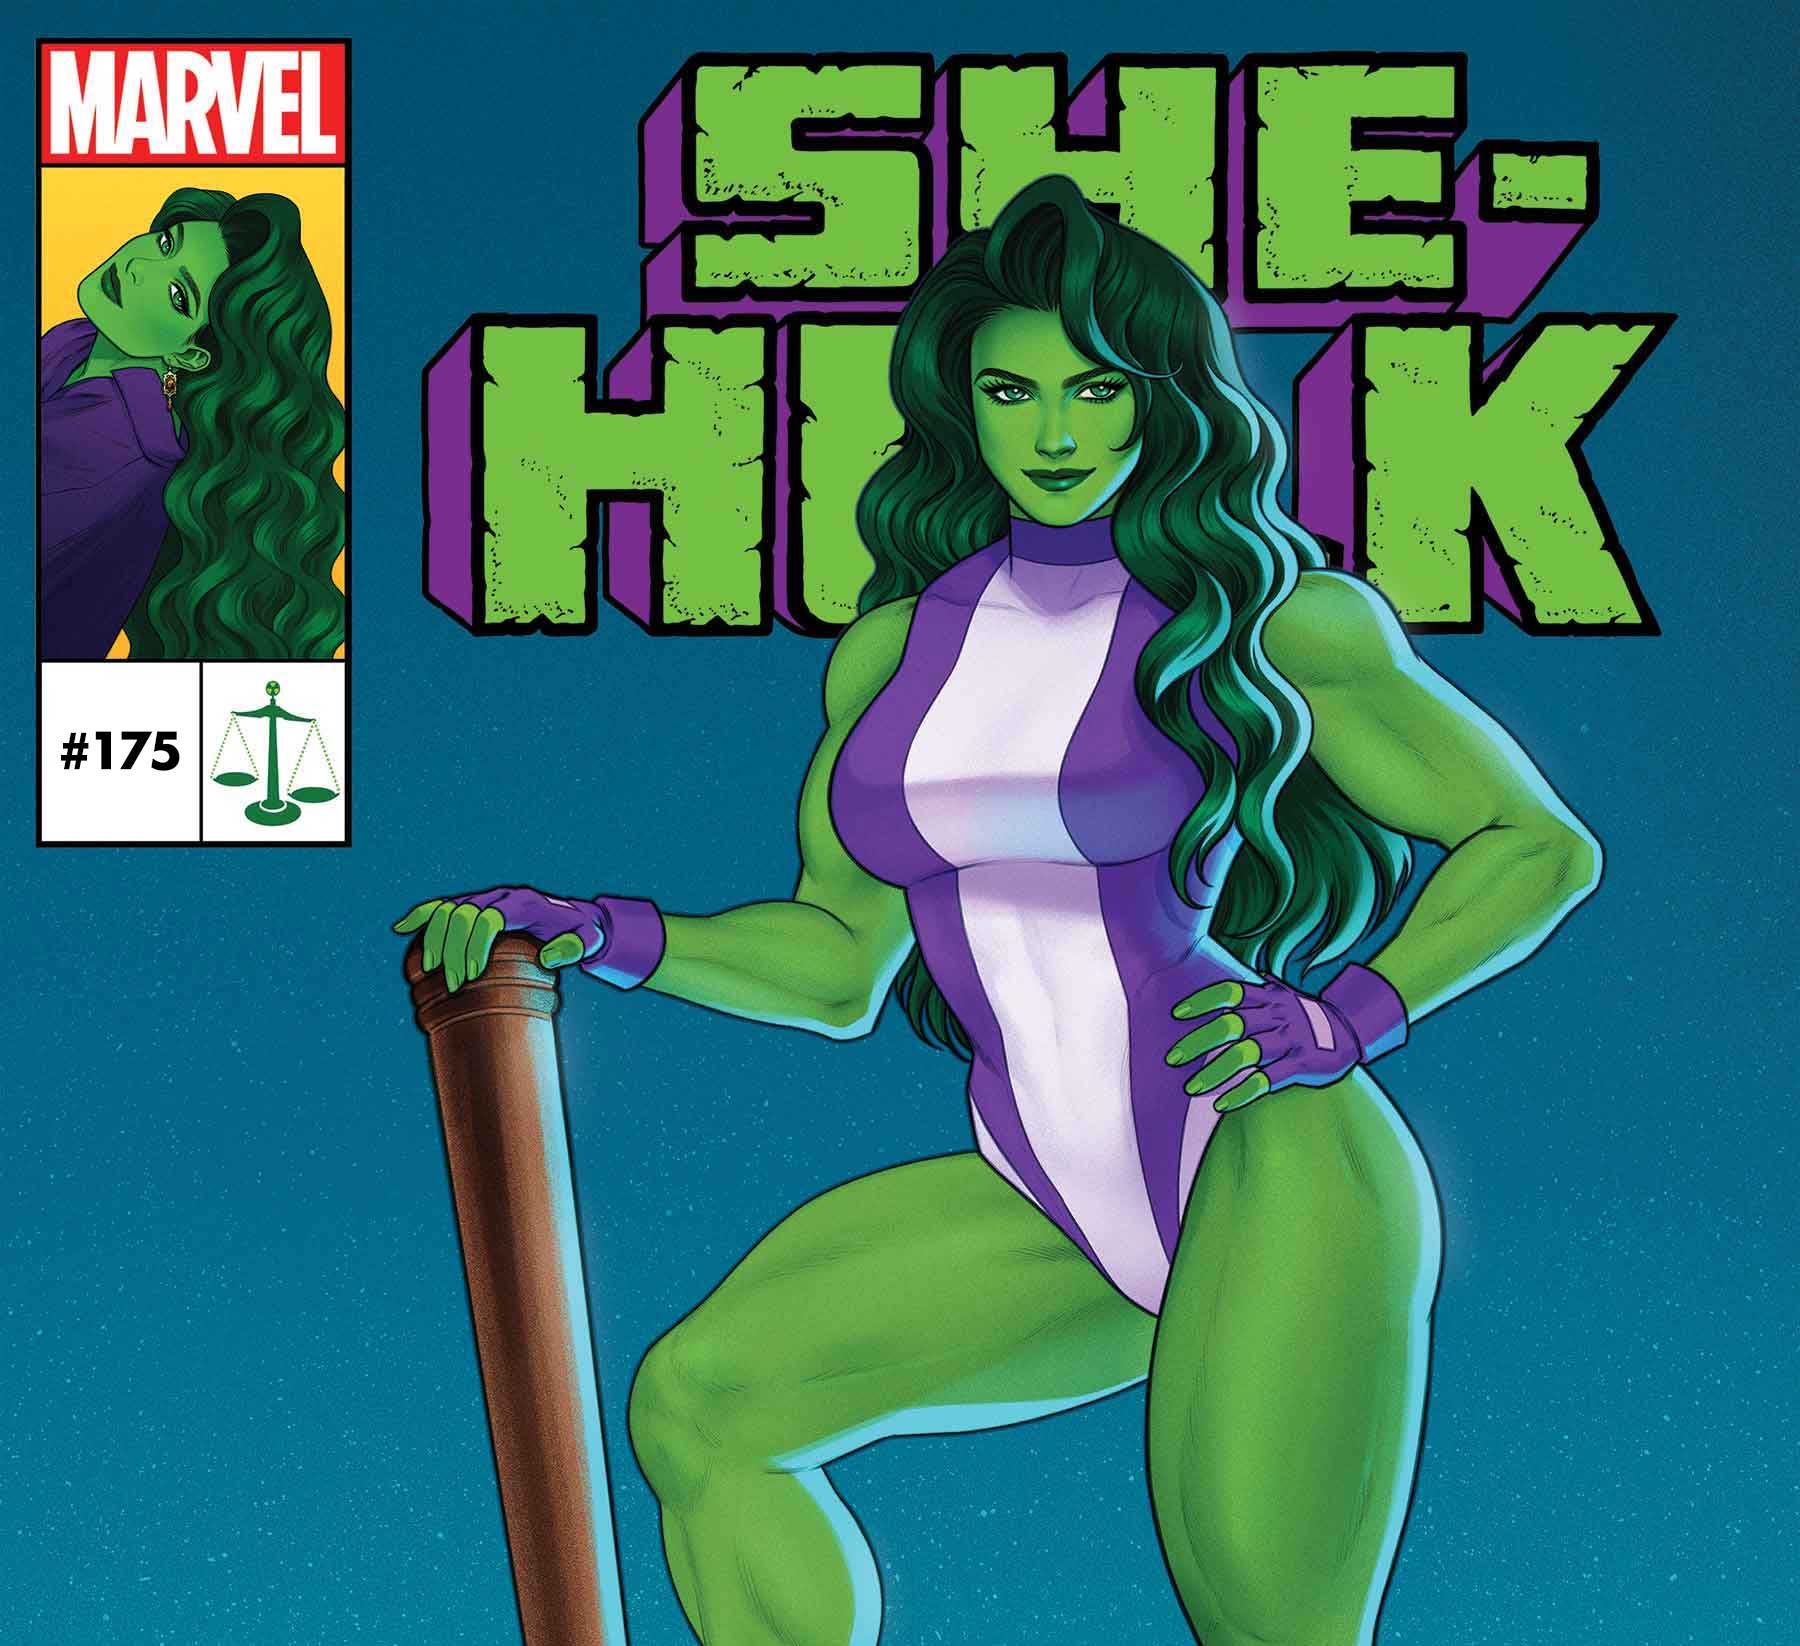 'She-Hulk' celebrates its 175th milestone issue April 19th